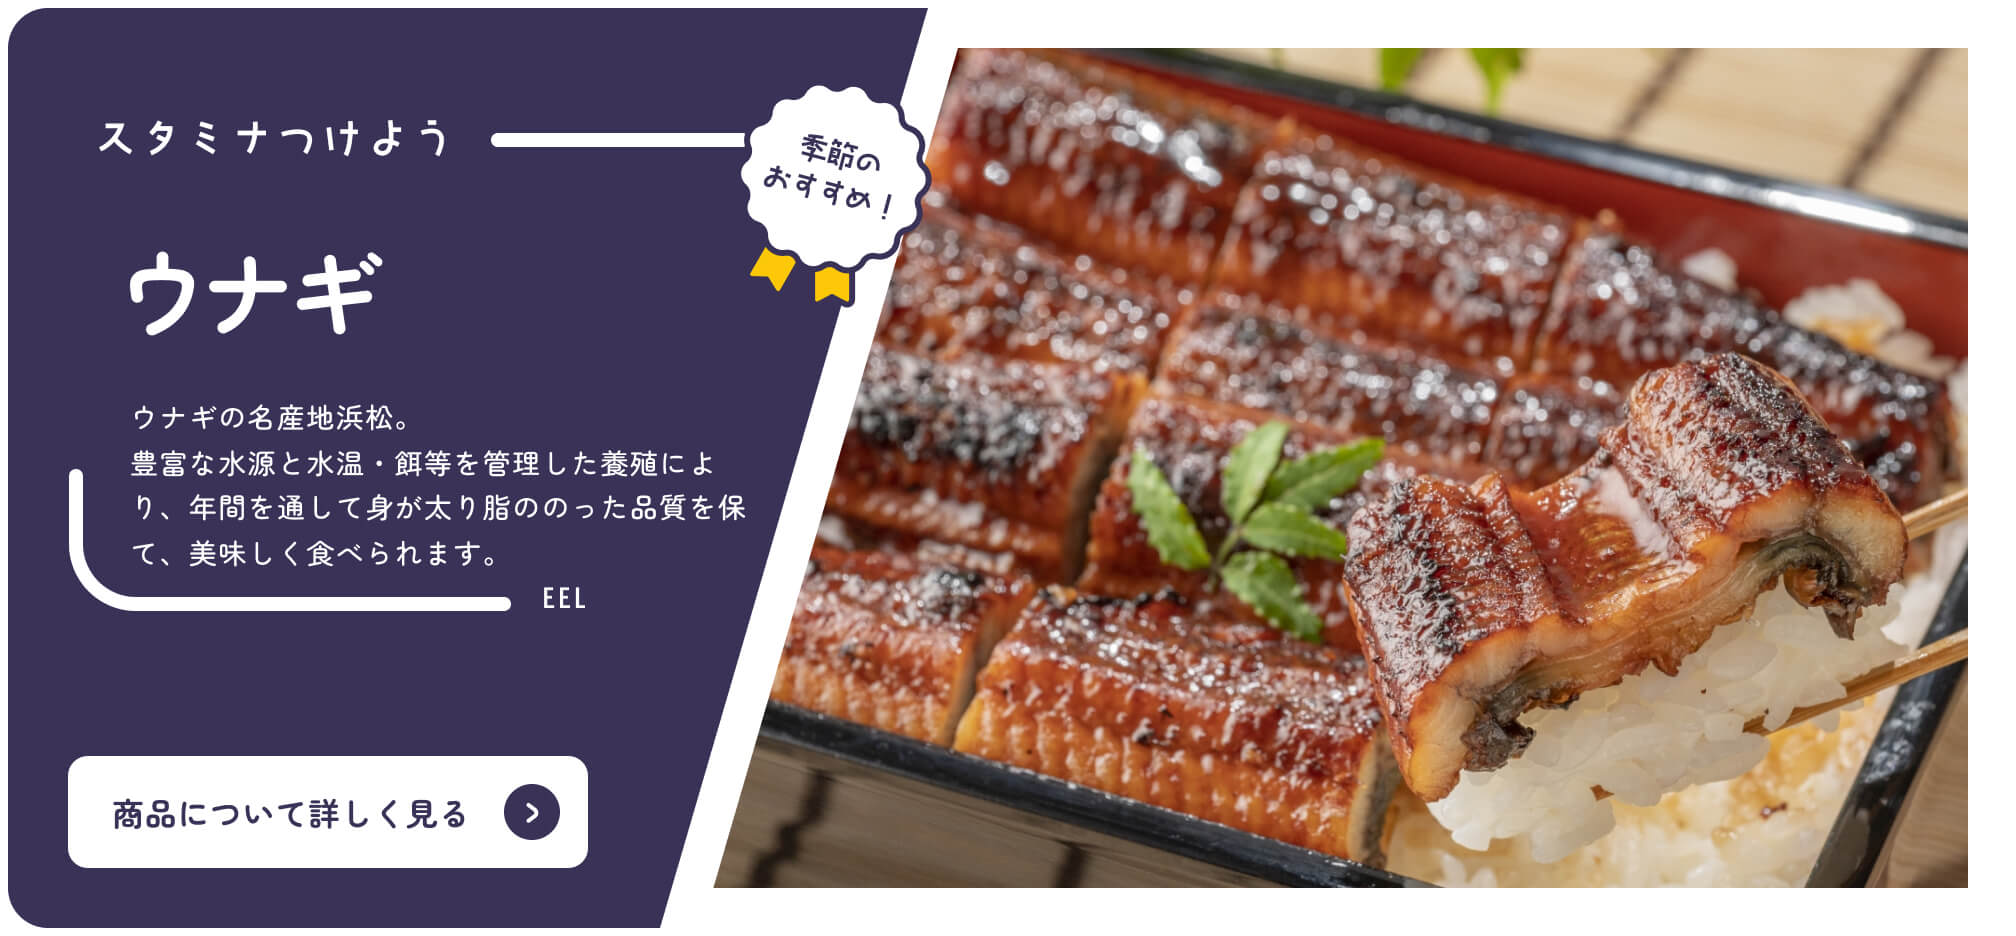 Buy Shizuoka Online Catalog Seasonal Recommended Eels